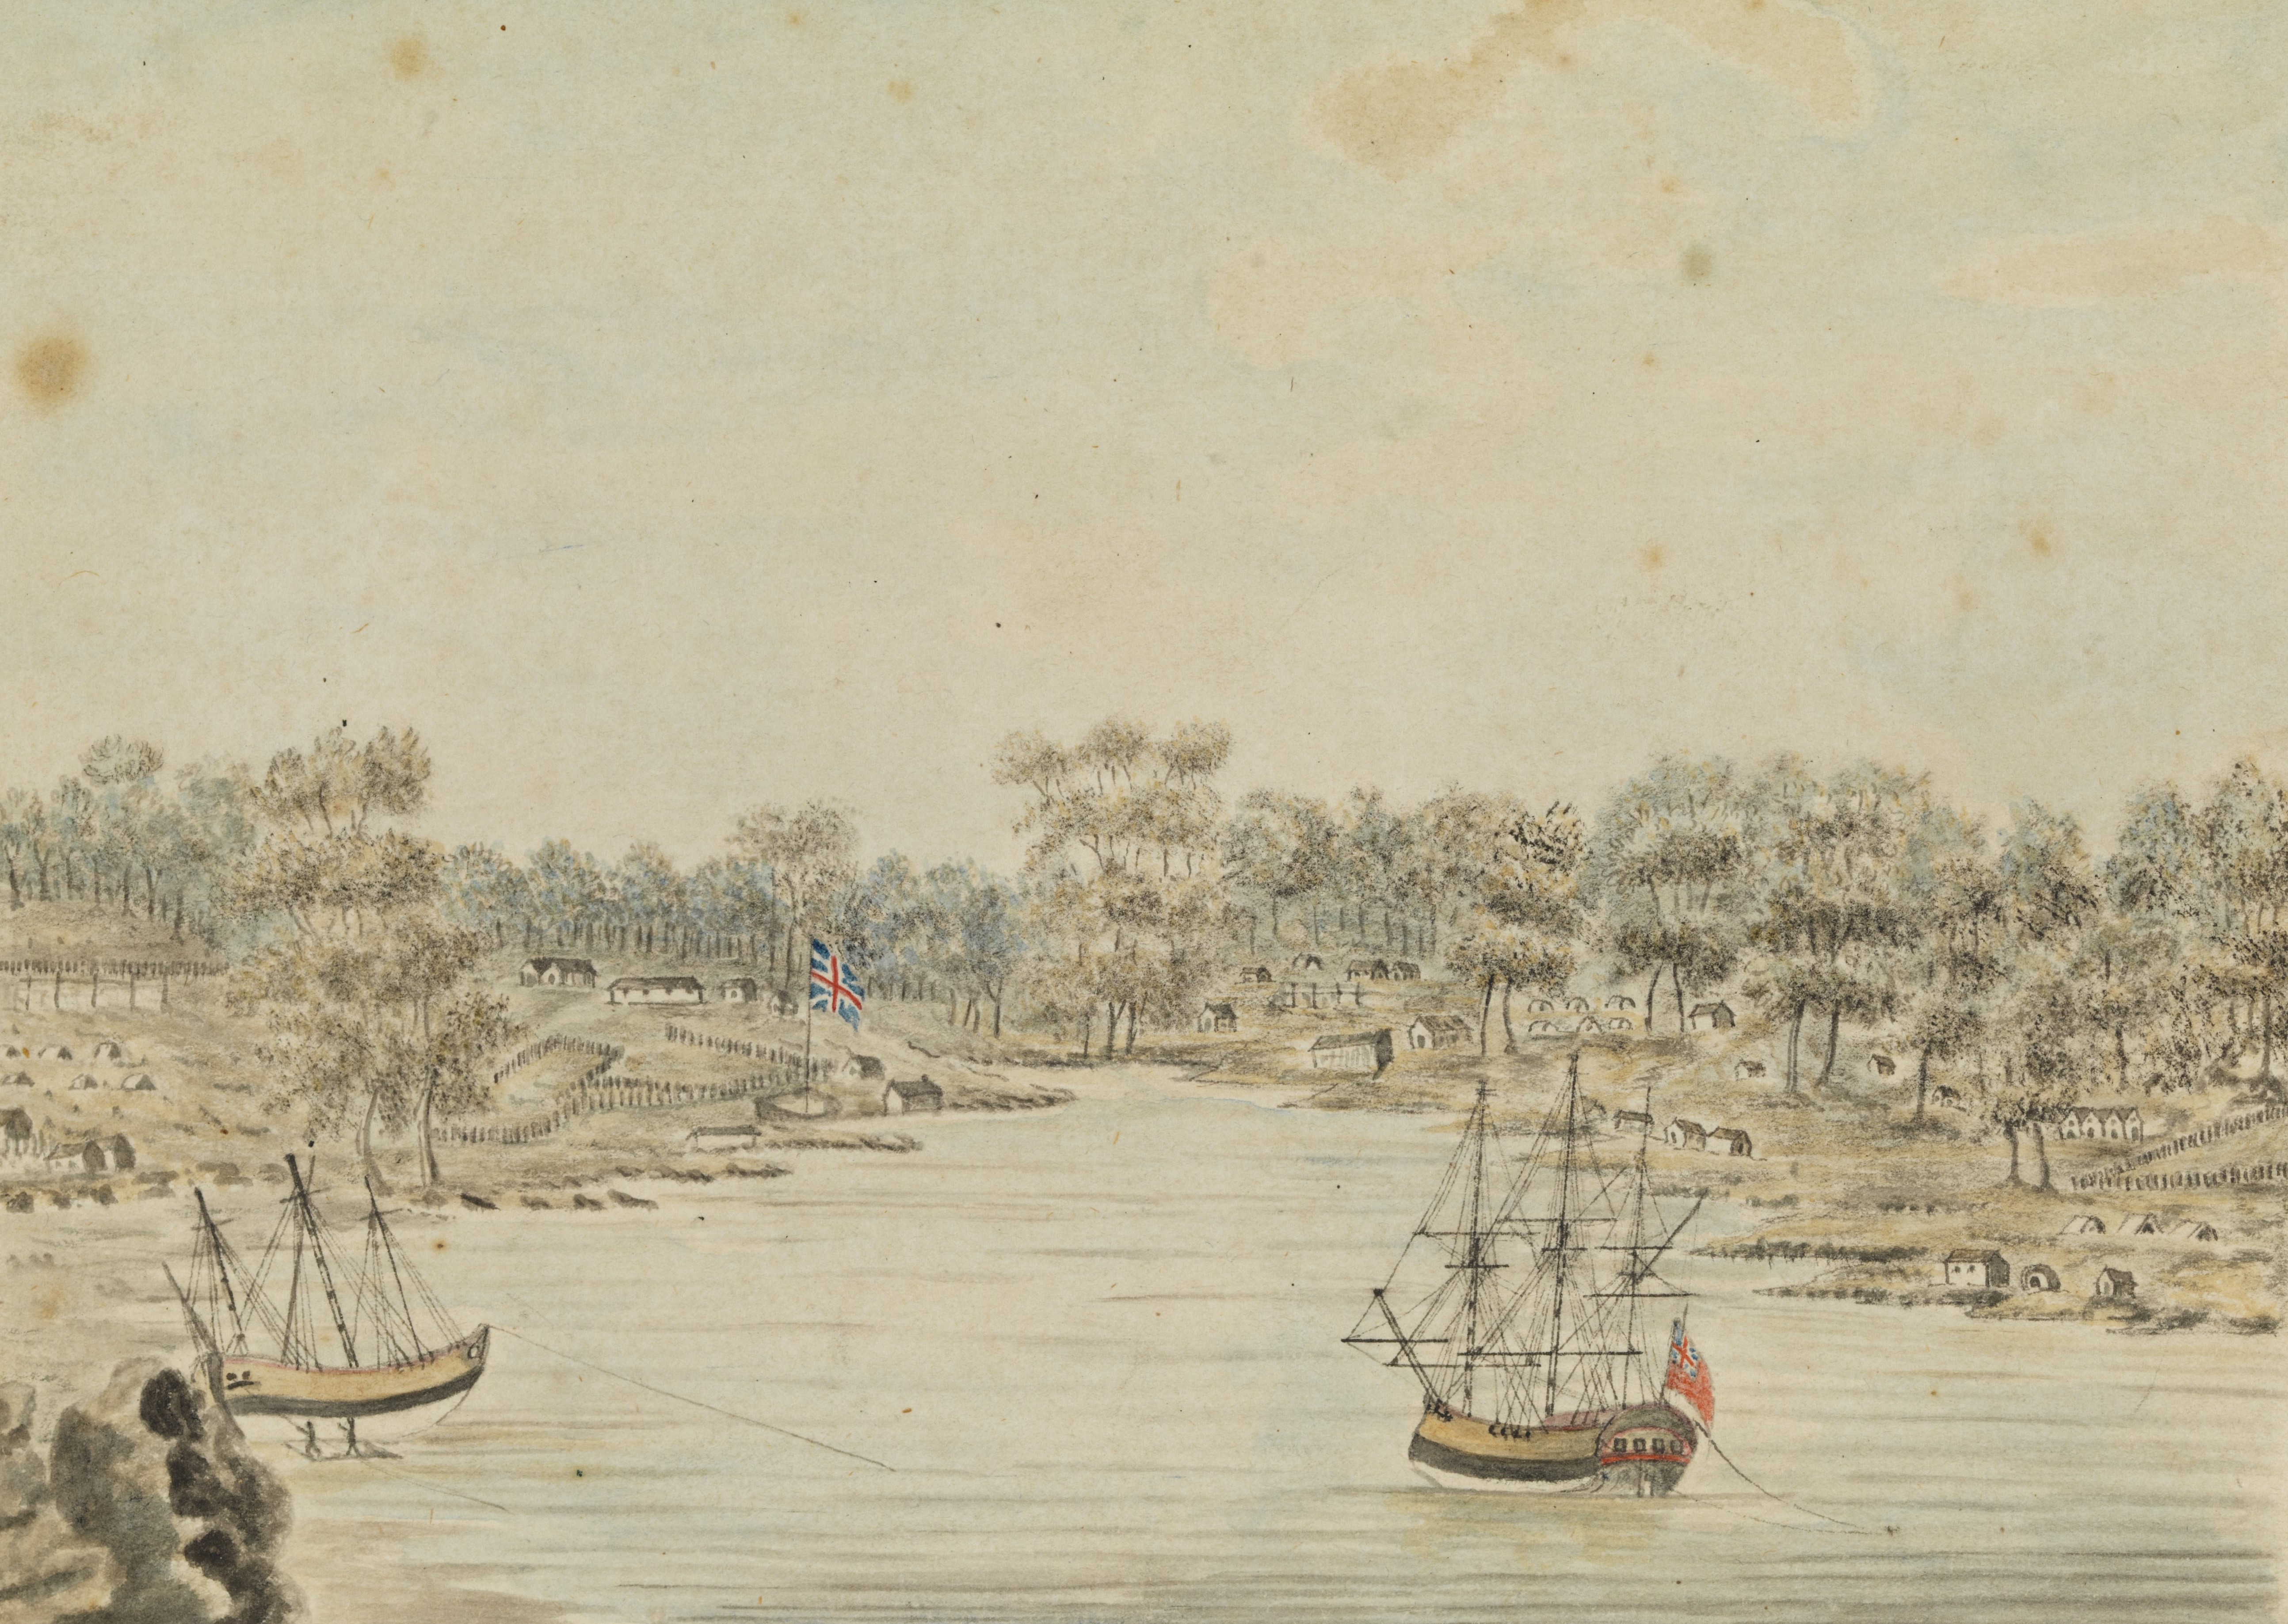 Illustration of Sydney Cove in Port Jackson